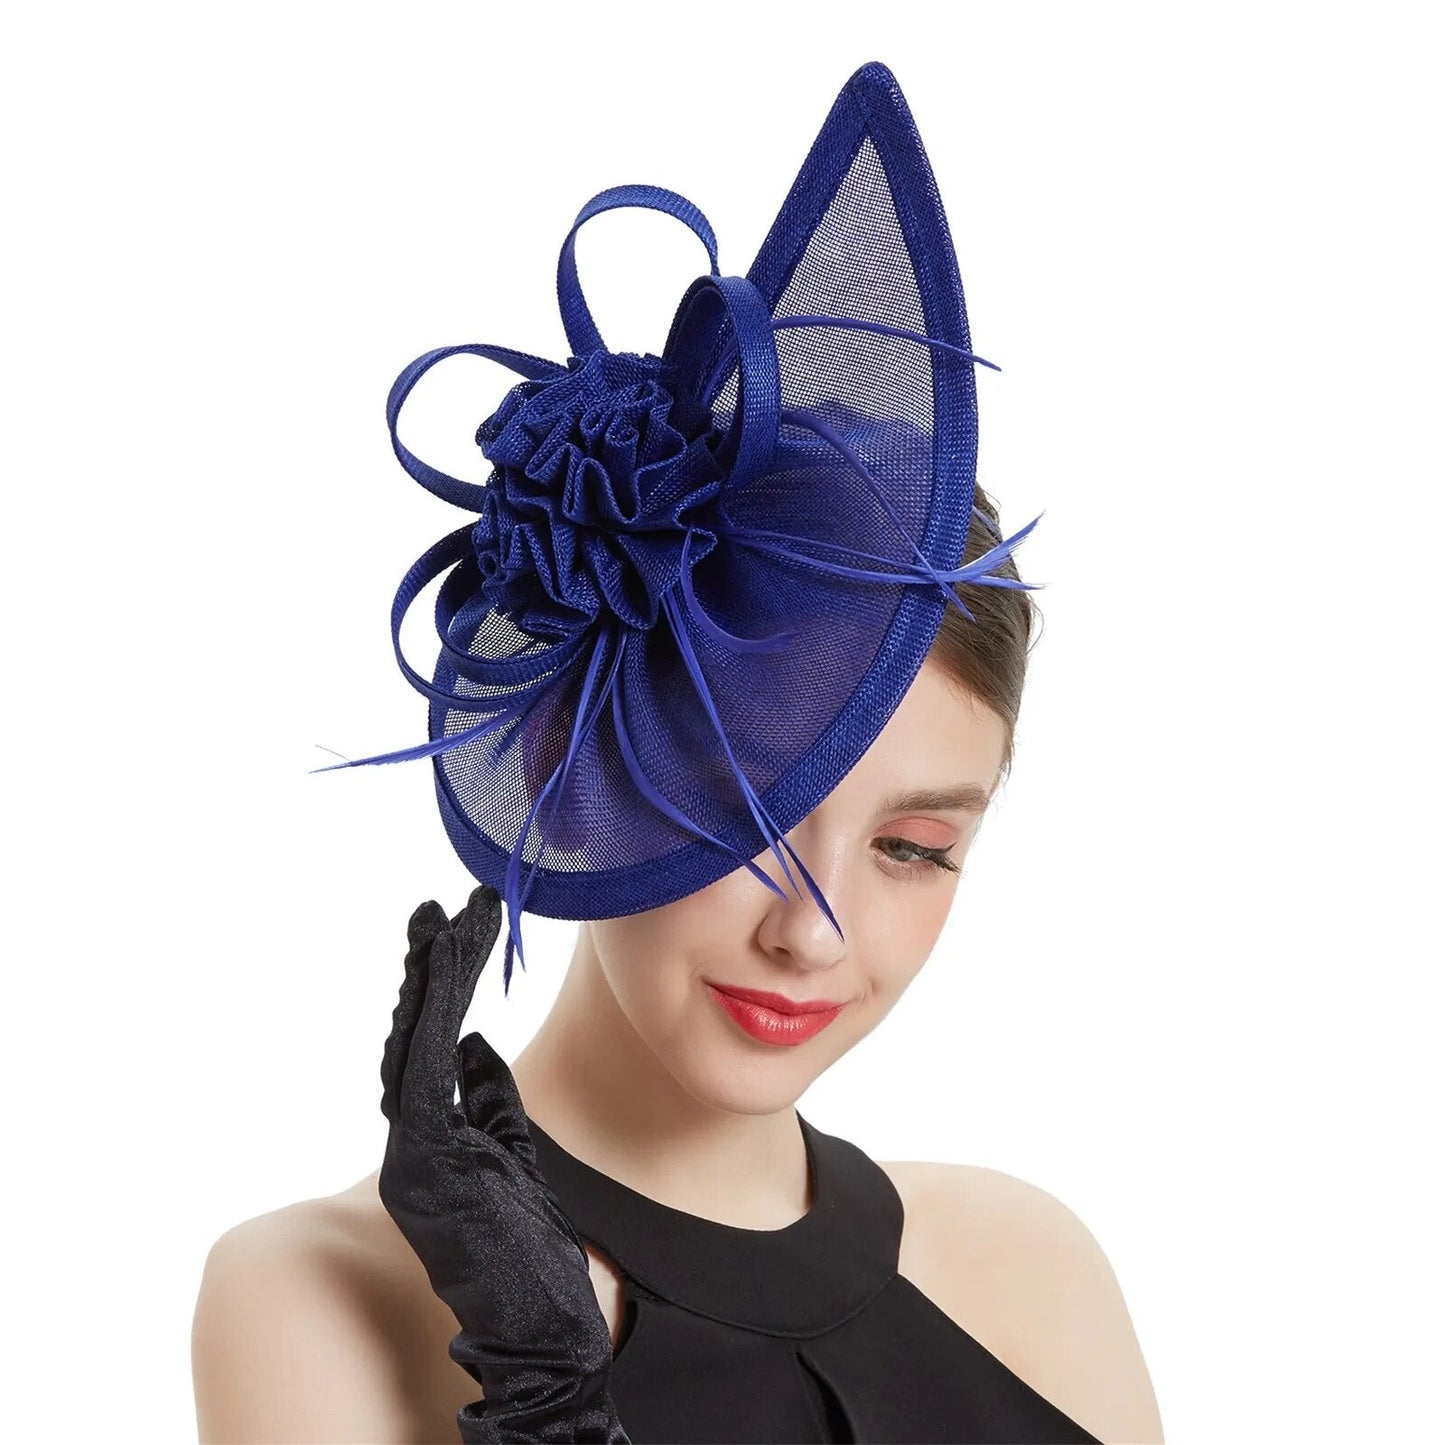 Londonisy Women Fascinator Headwear Wedding Party Hair Accessories-fascinator-royal blue-All10dollars.com